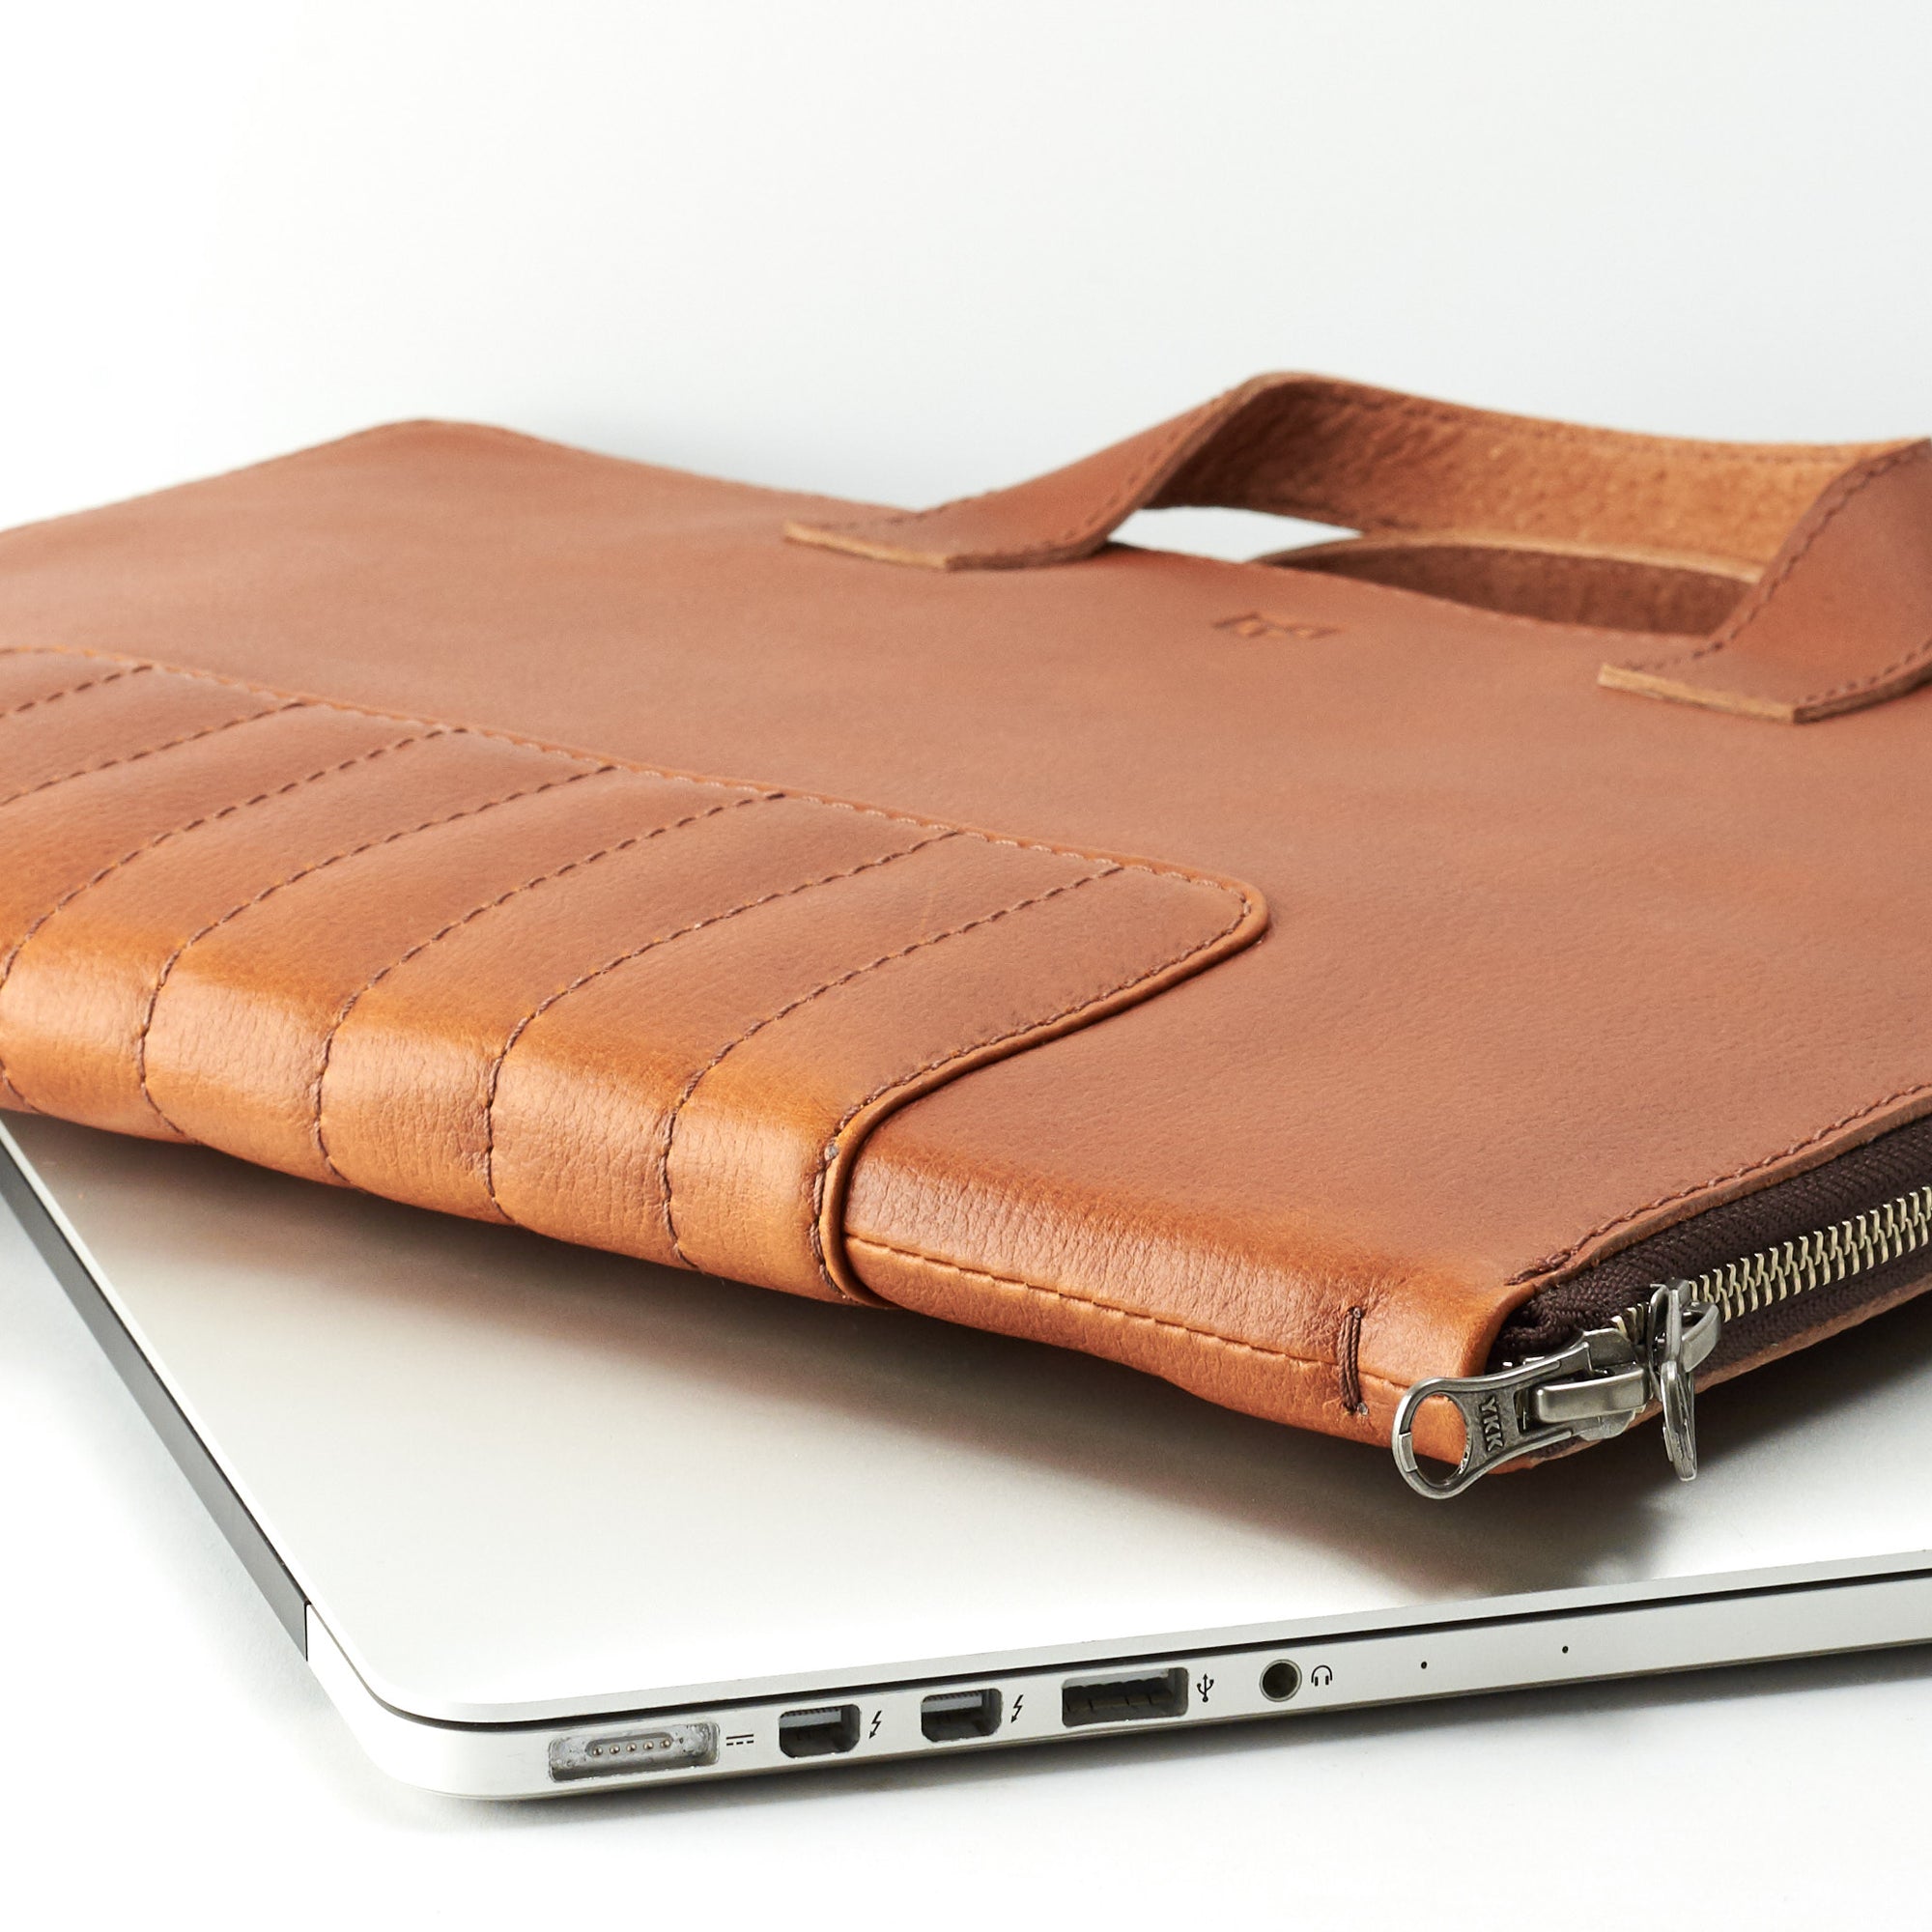 Designer laptop briefcase. Tan leather laptop portfolio. Business document organizer for men.